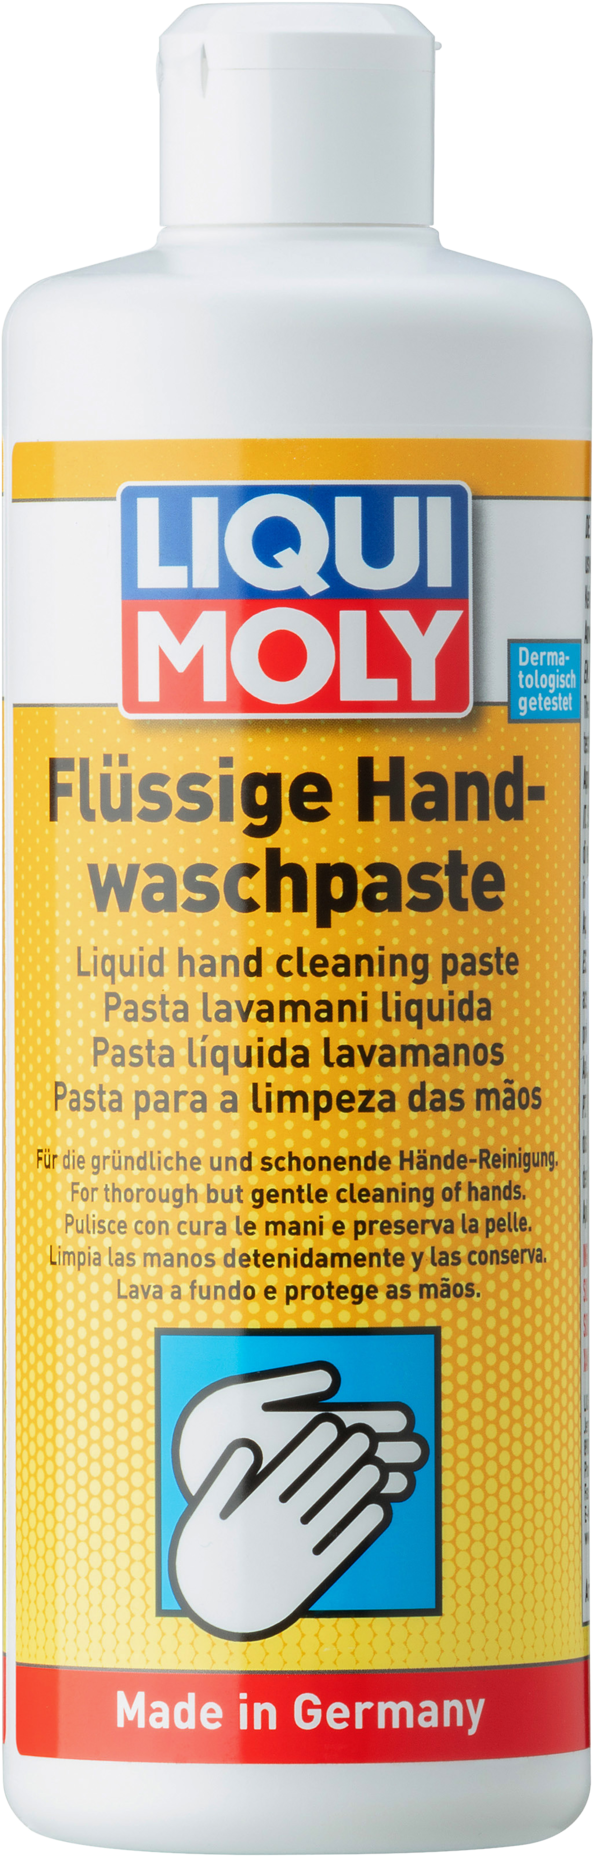 Liqui Moly Vloeibare handen-was-pasta, 6 x 500 ml detail 2